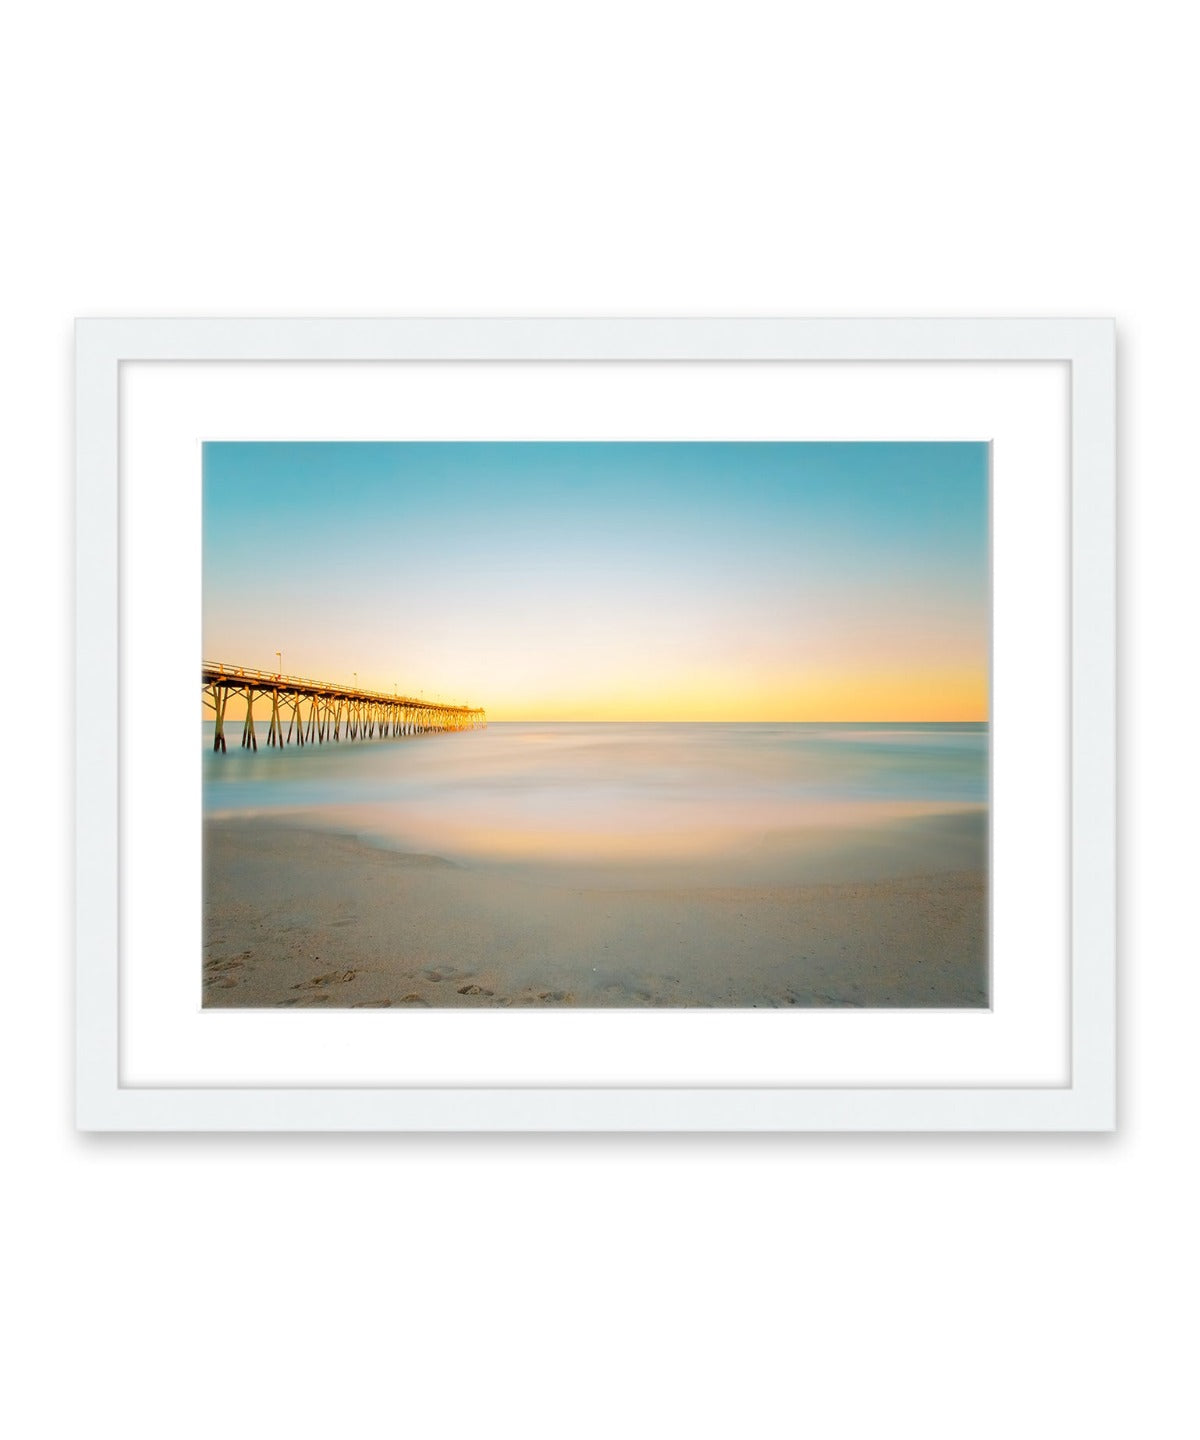 blue and yellow sunset Carolina beach photograph, white frame by Wright and Roam